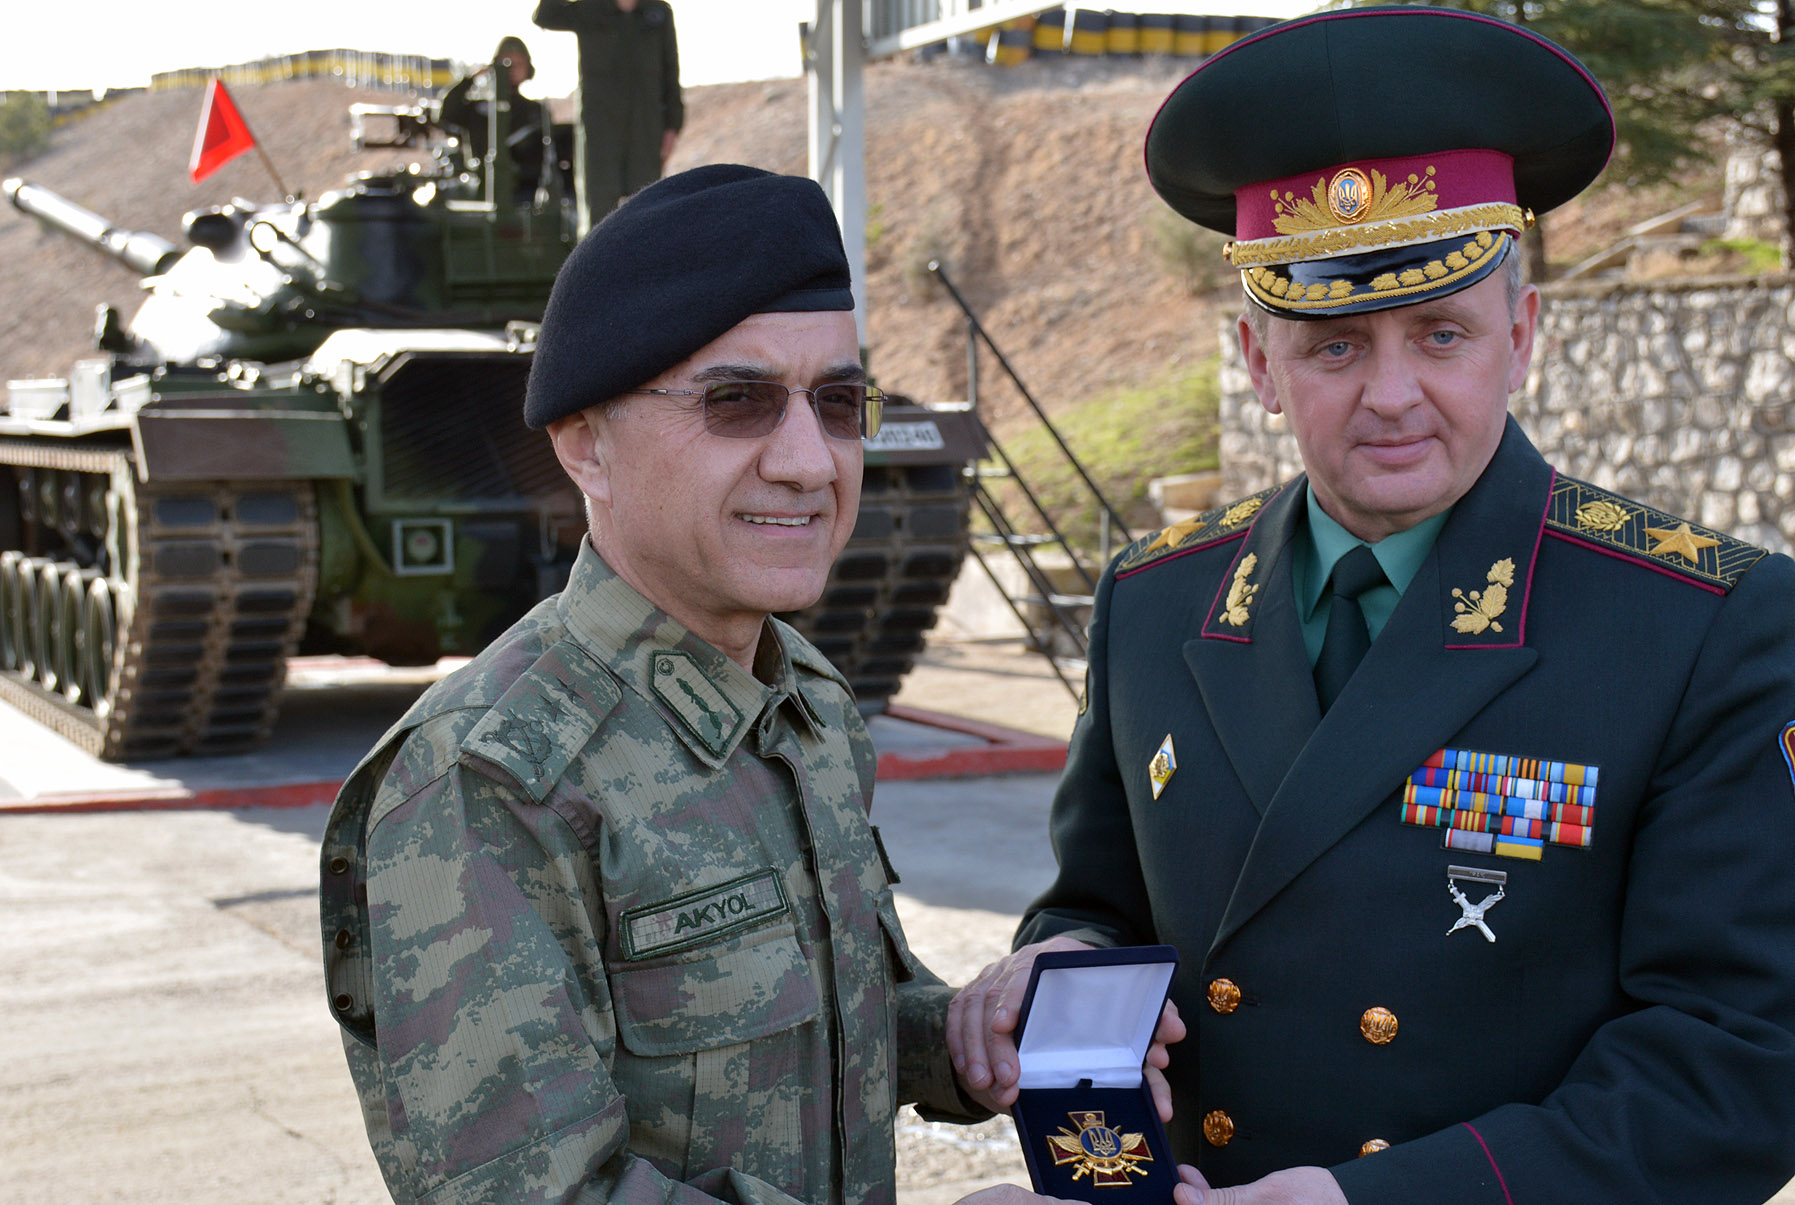 Ukrainian Chief of General Staff visits Turkey - Defence Blog